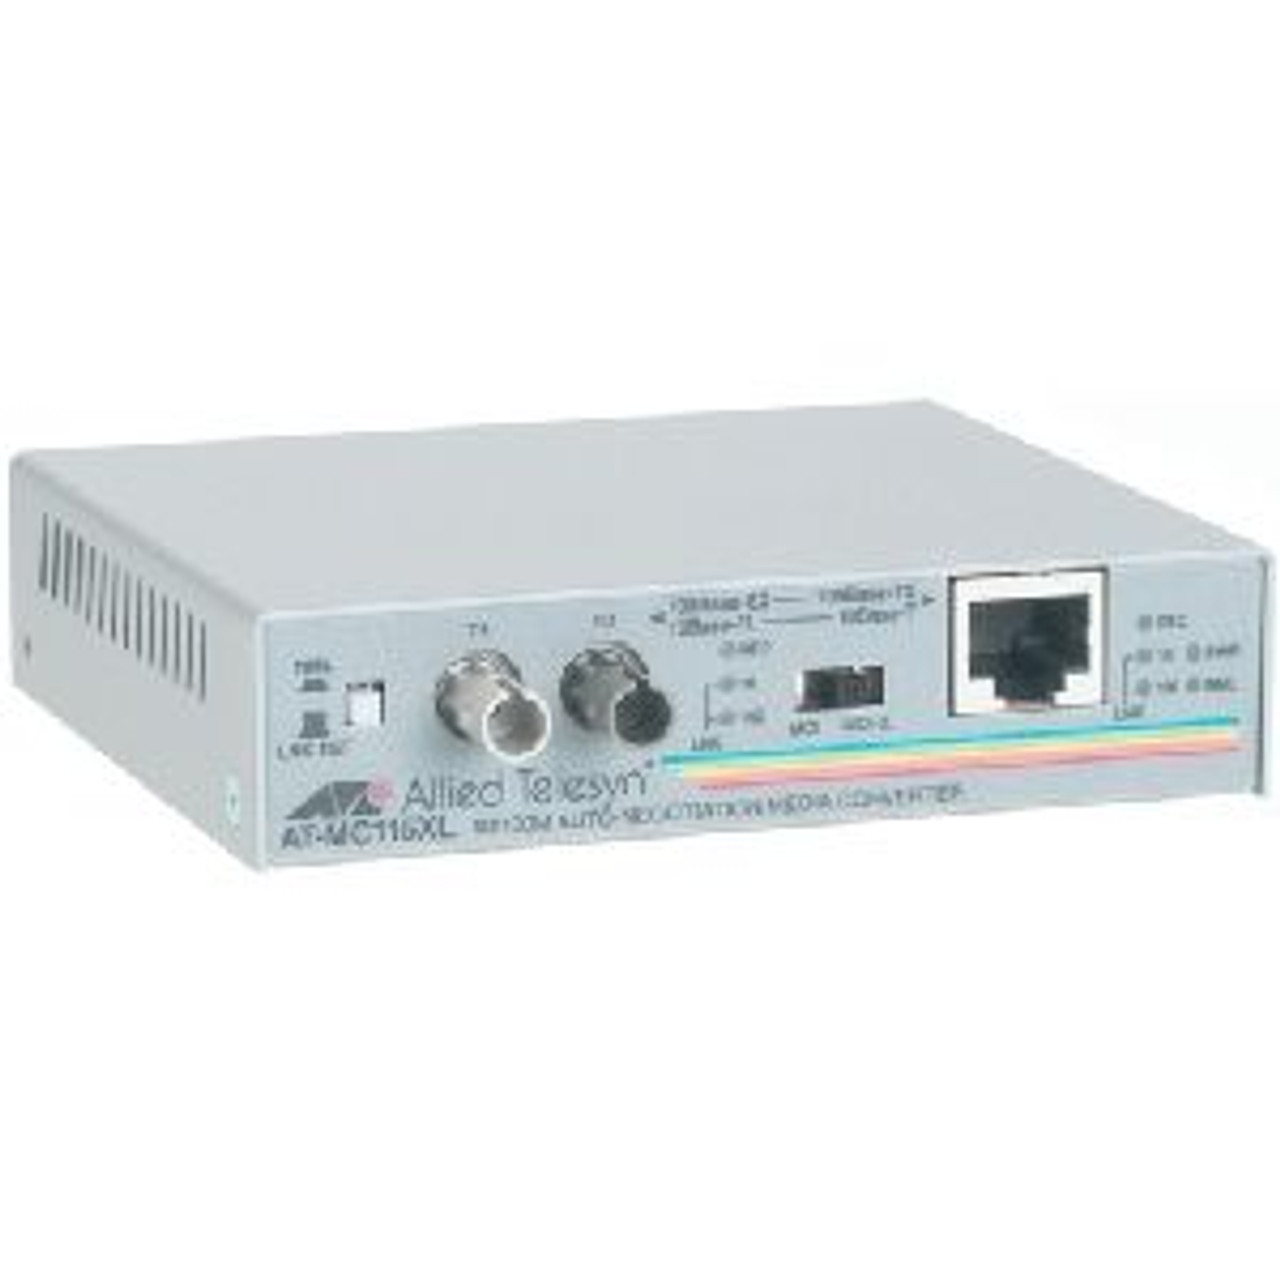 Allied Telesis 10/100Base-TX to 10FL/ 100Base-SX ST Media Converter Mfr P/N AT-MC115XL-20